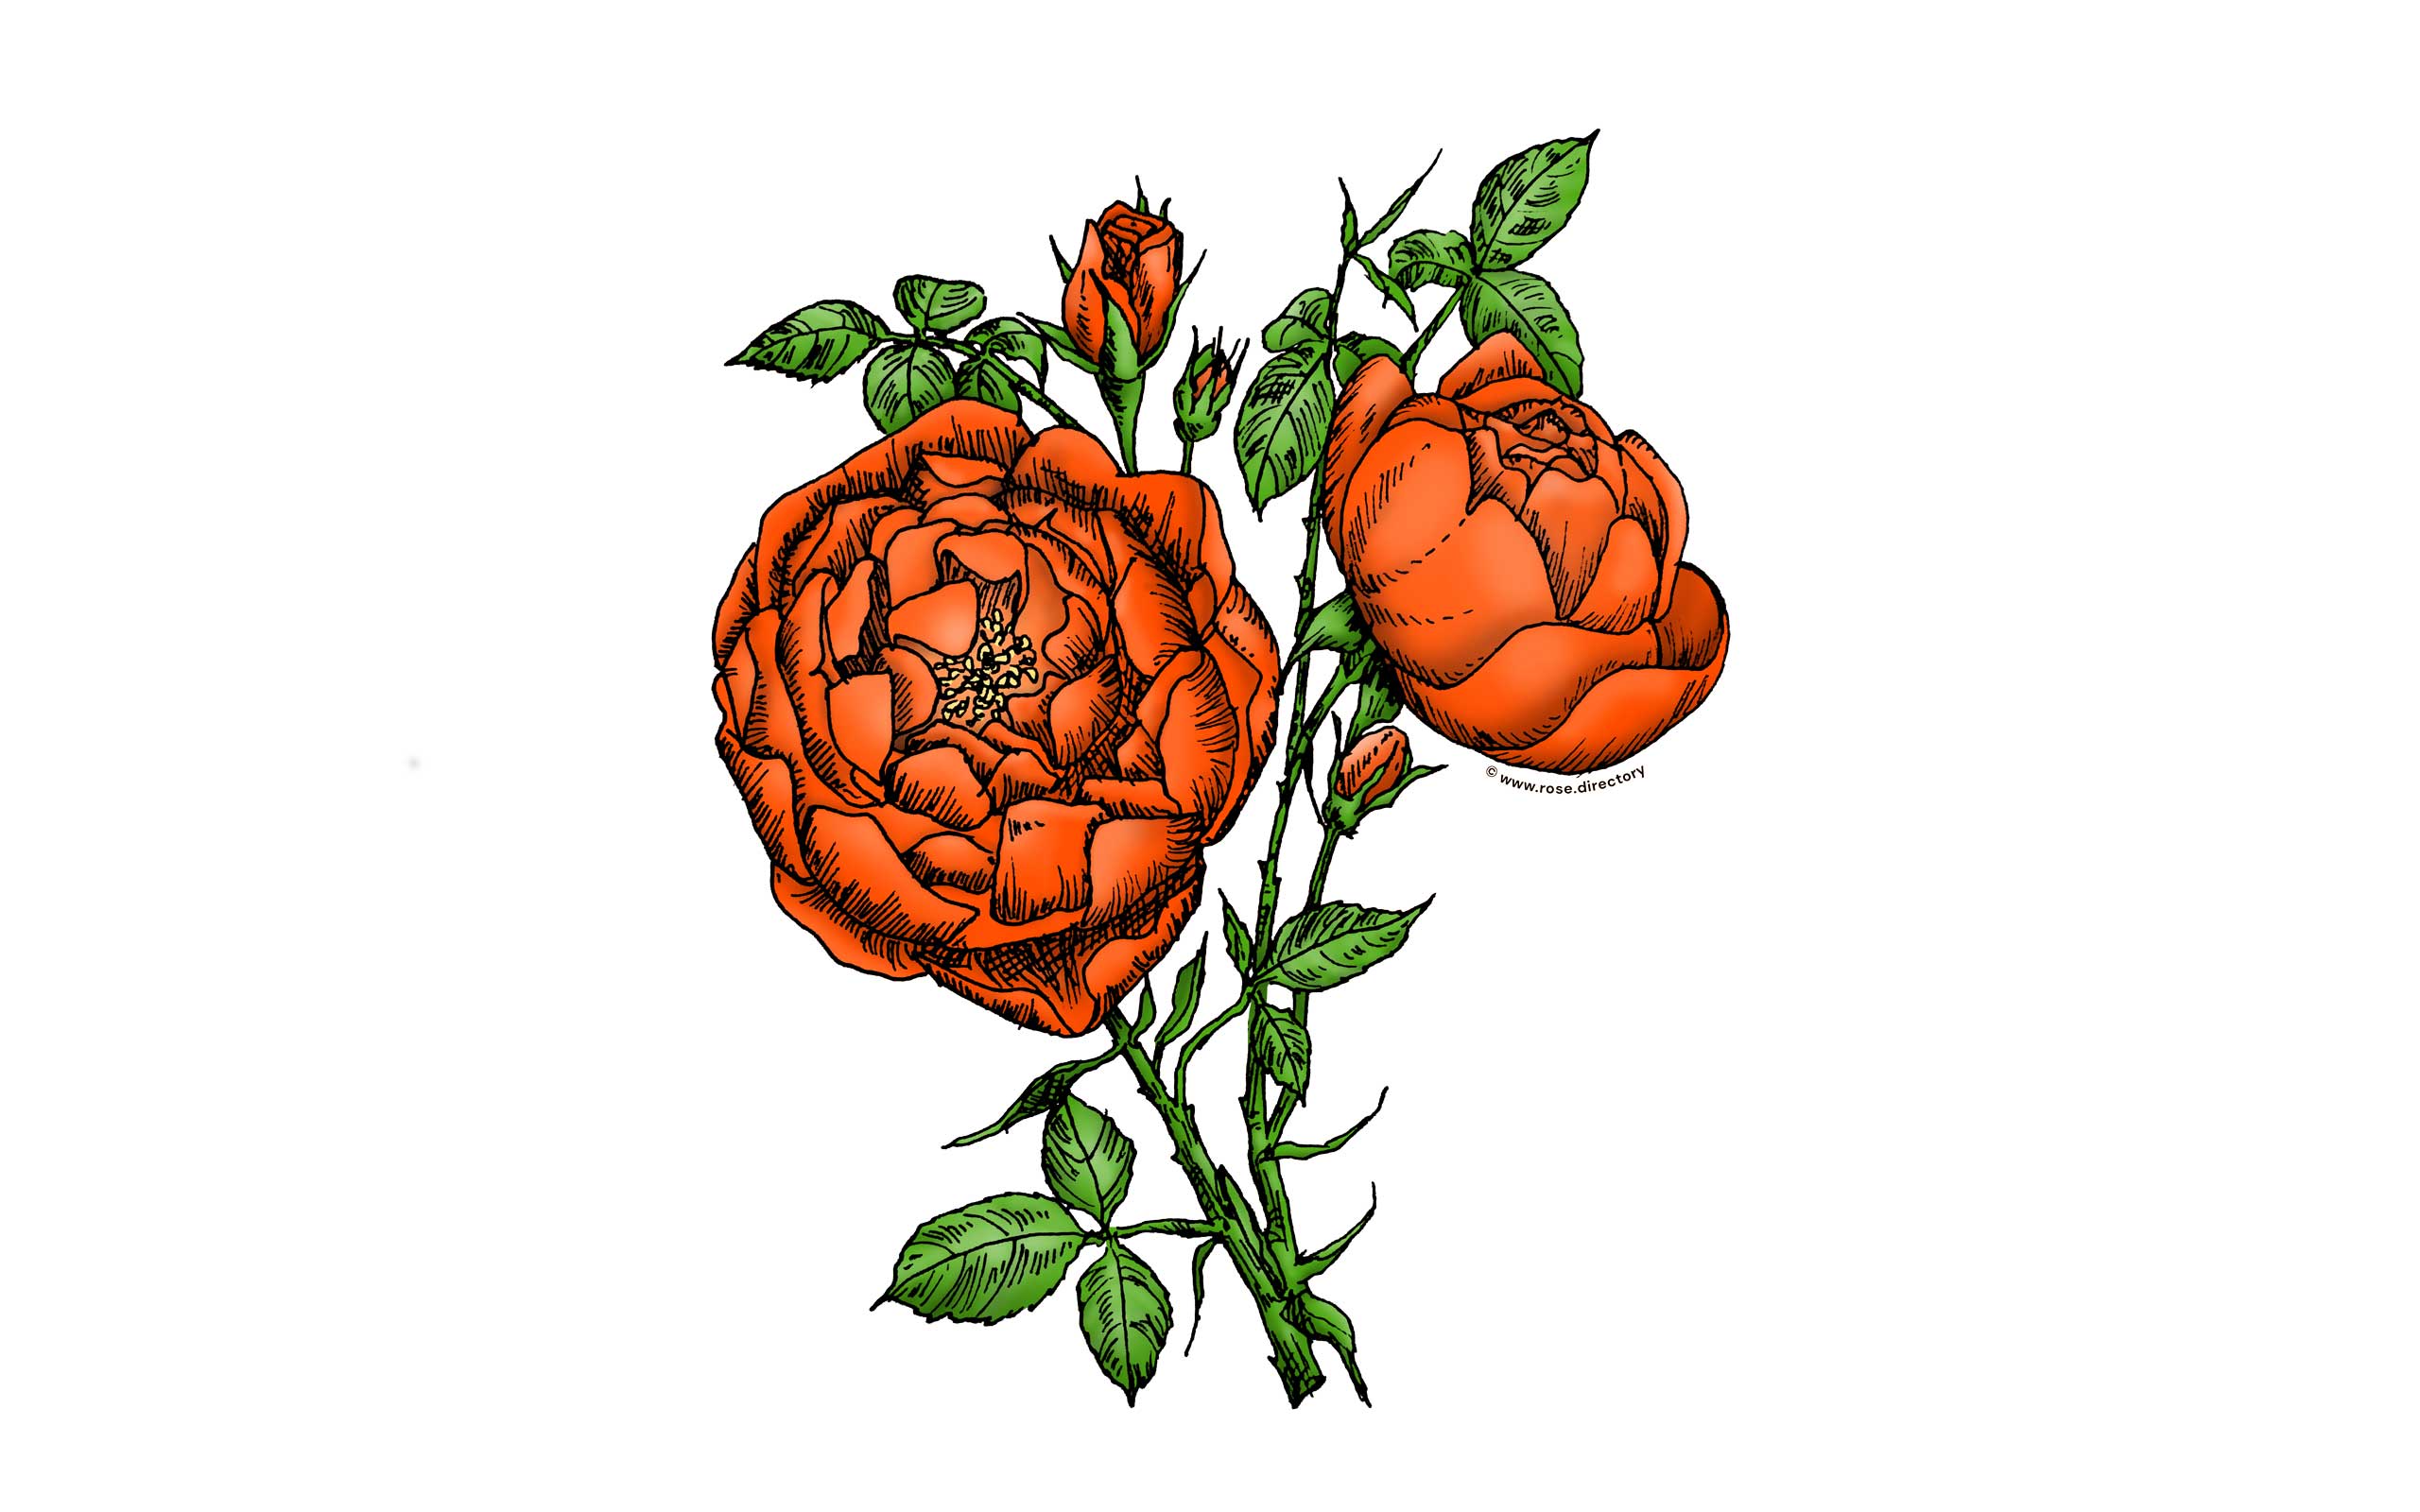 Orange Cupped Rose Bloom Full 26-40 Petals In 3+ Rows